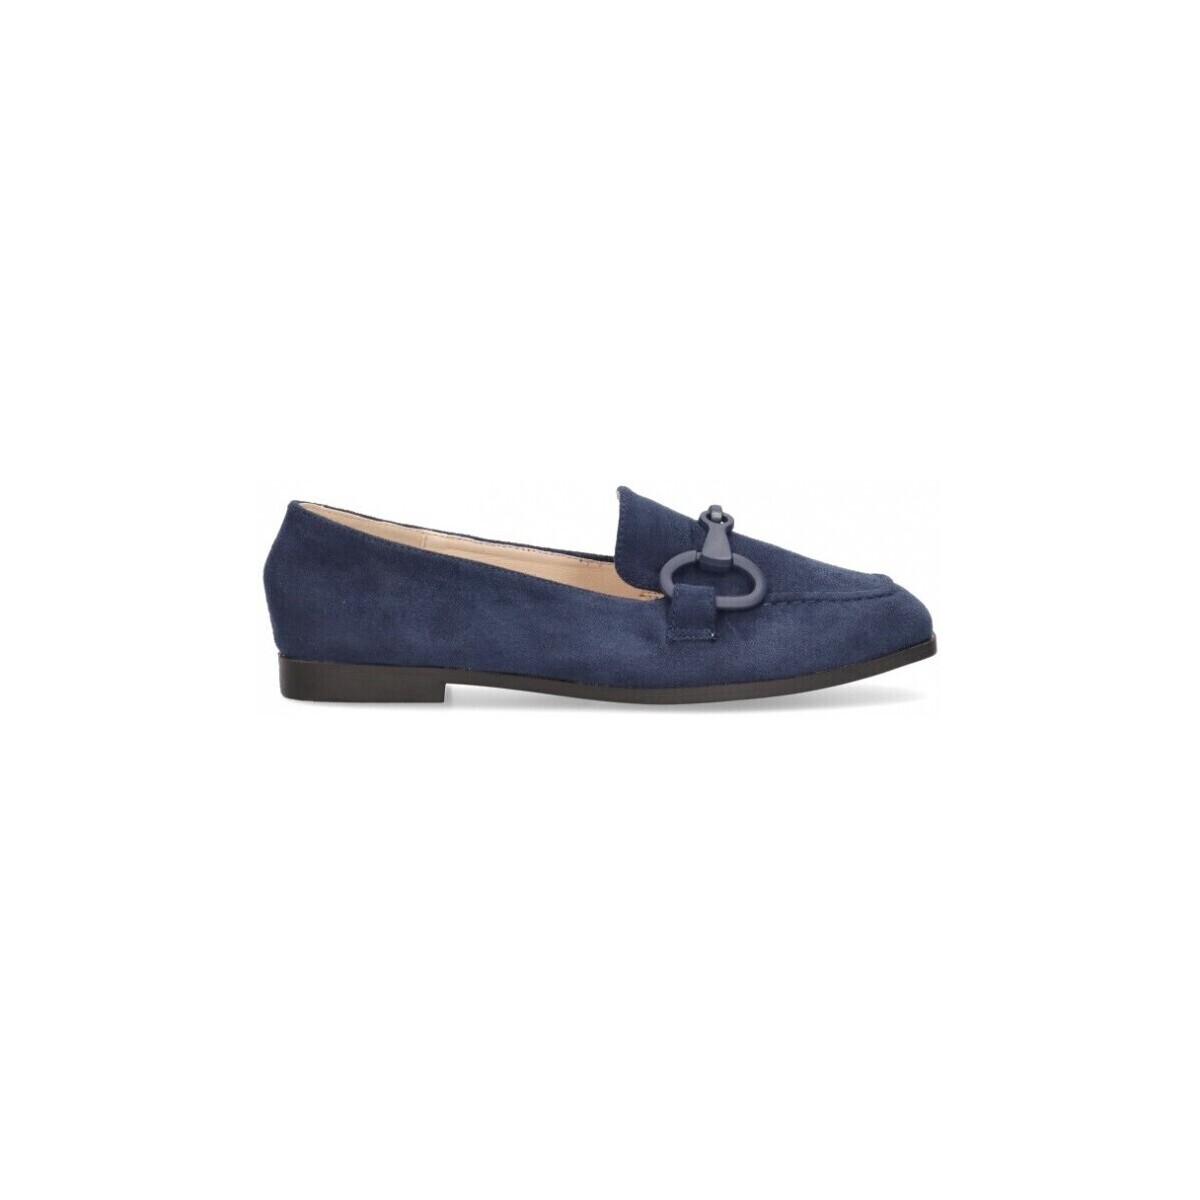 Chaussures Femme Zadig & Voltaire 70181 Bleu